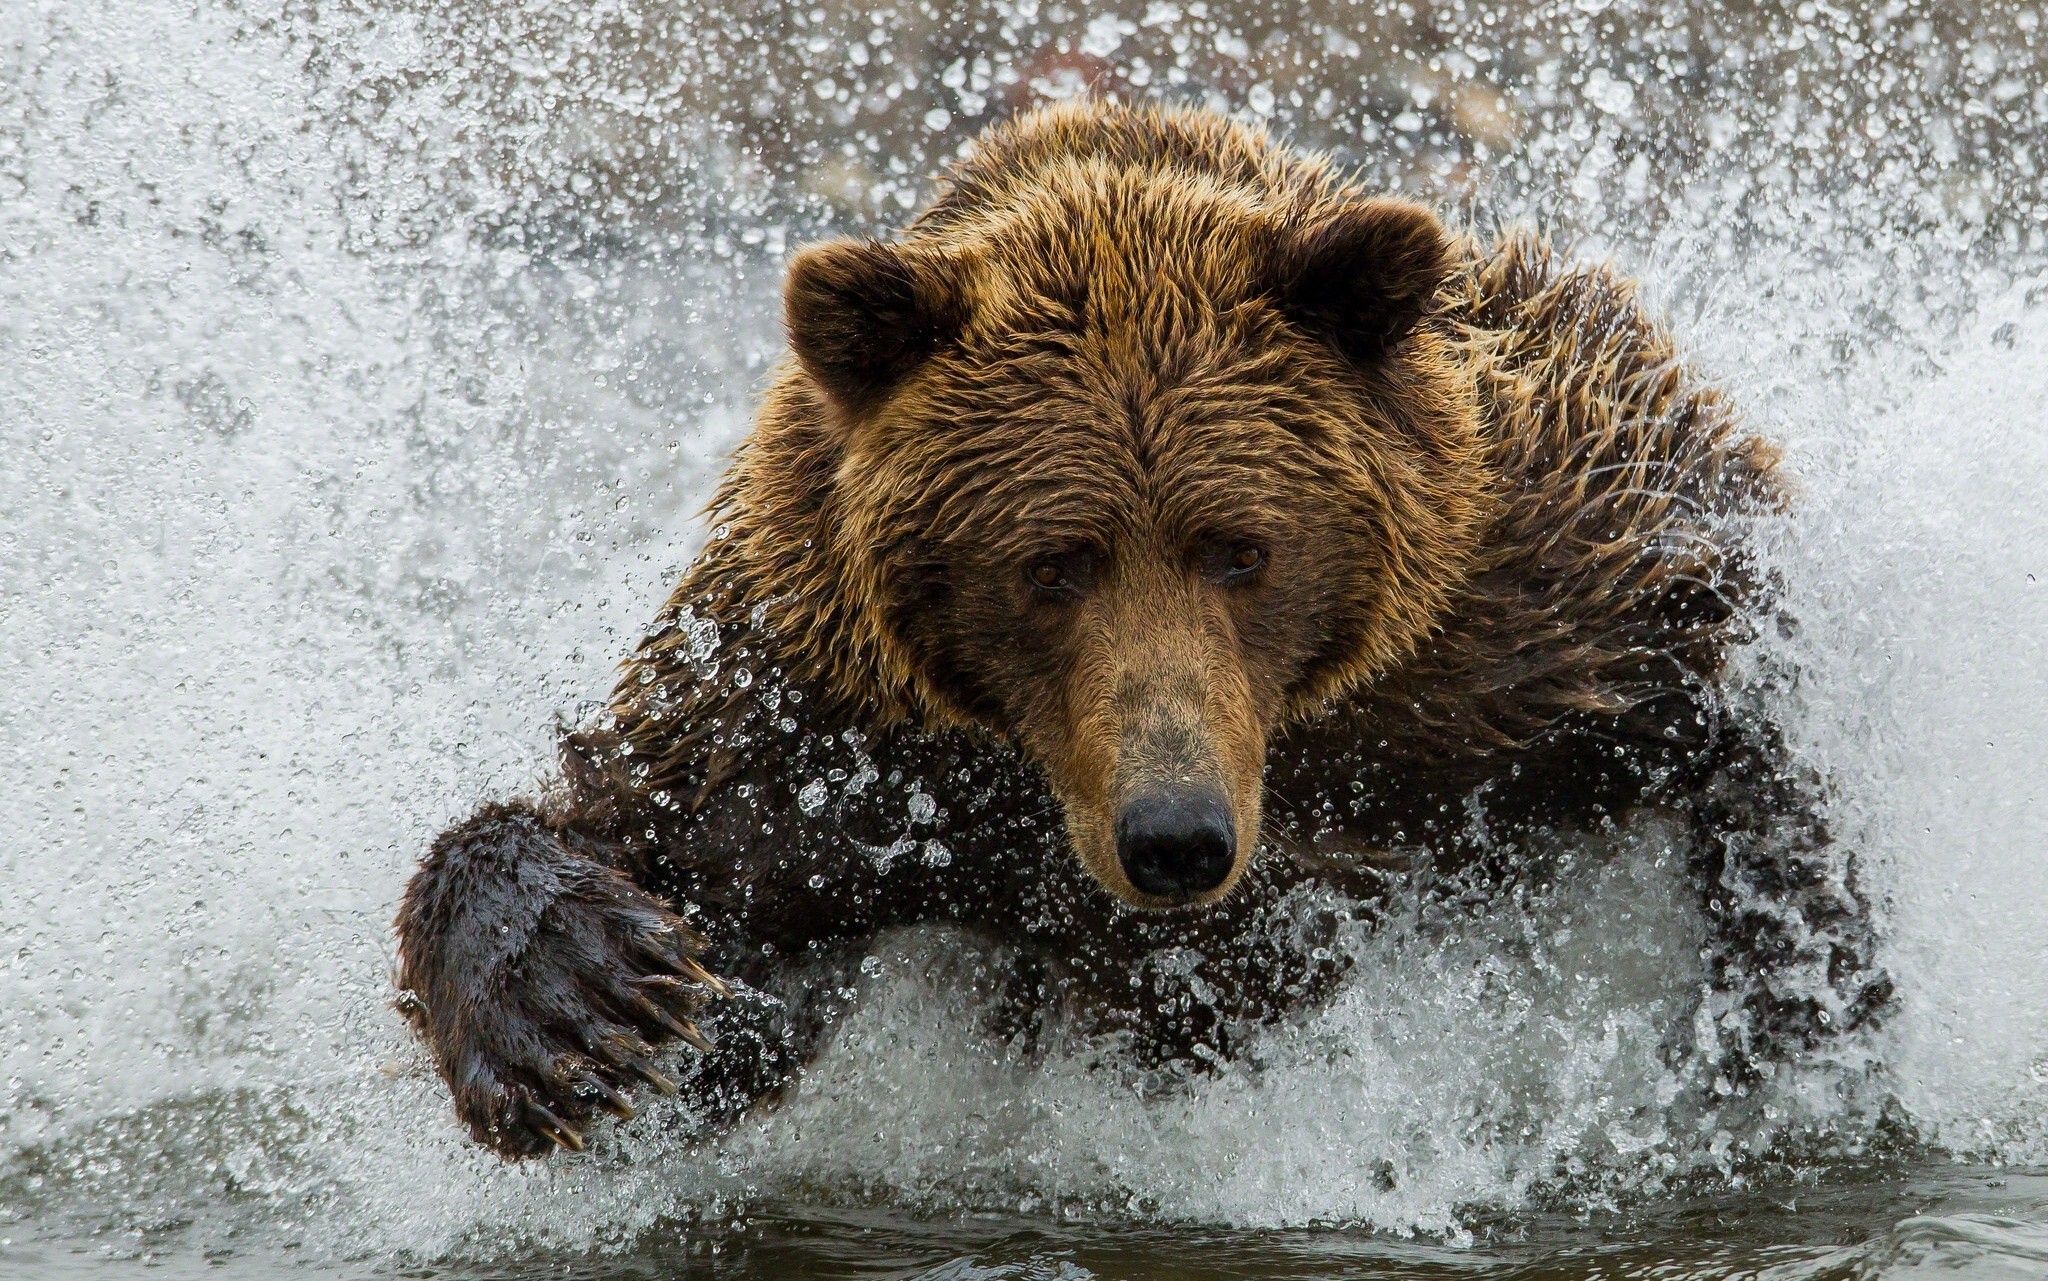 General 2048x1281 animals splashes bears wildlife wet water nature mammals closeup